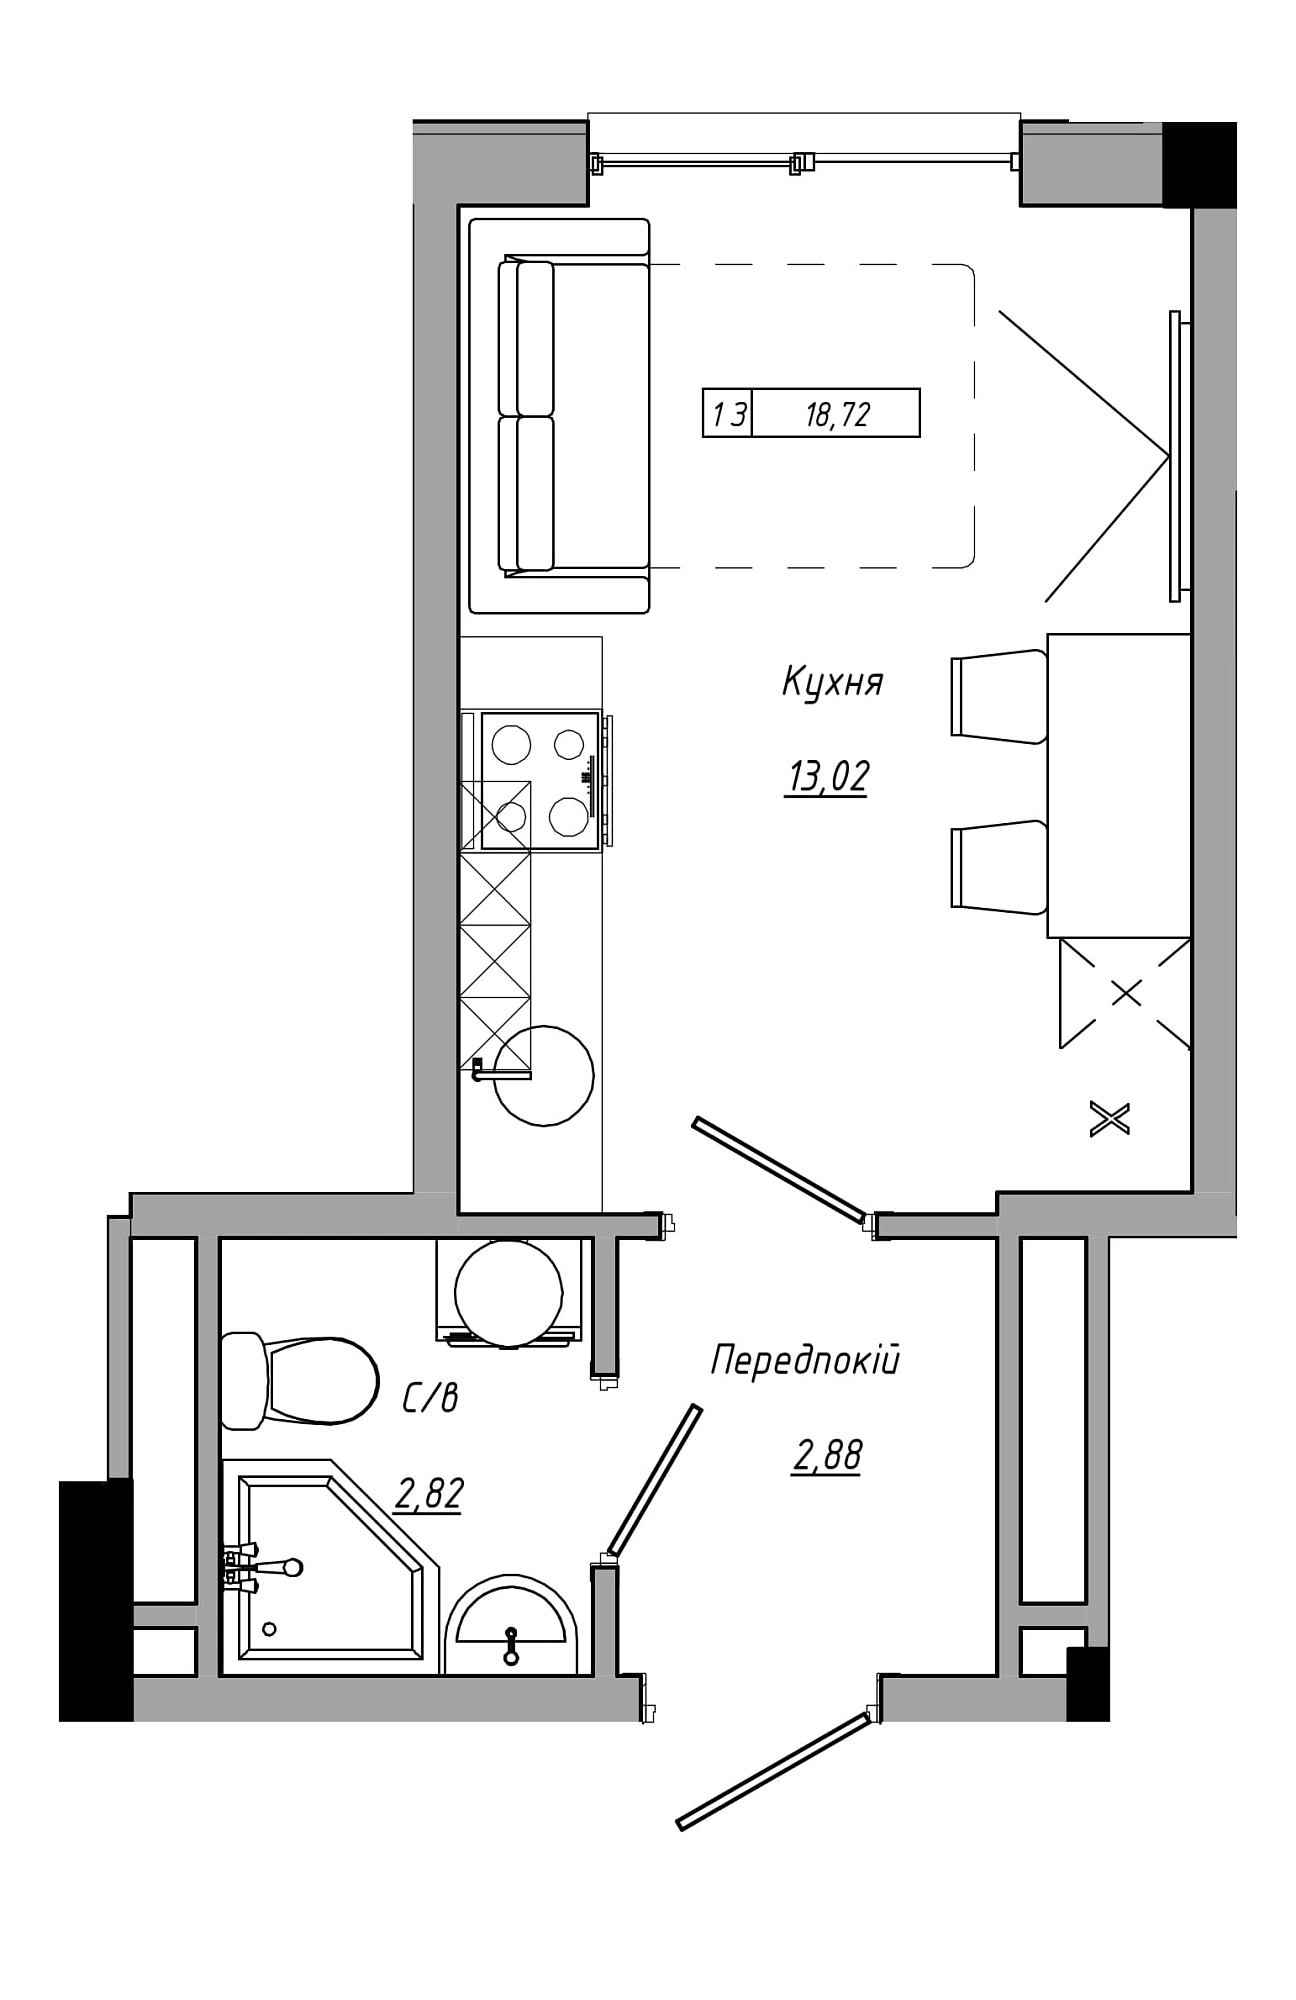 Planning Smart flats area 18.72m2, AB-21-13/00111.